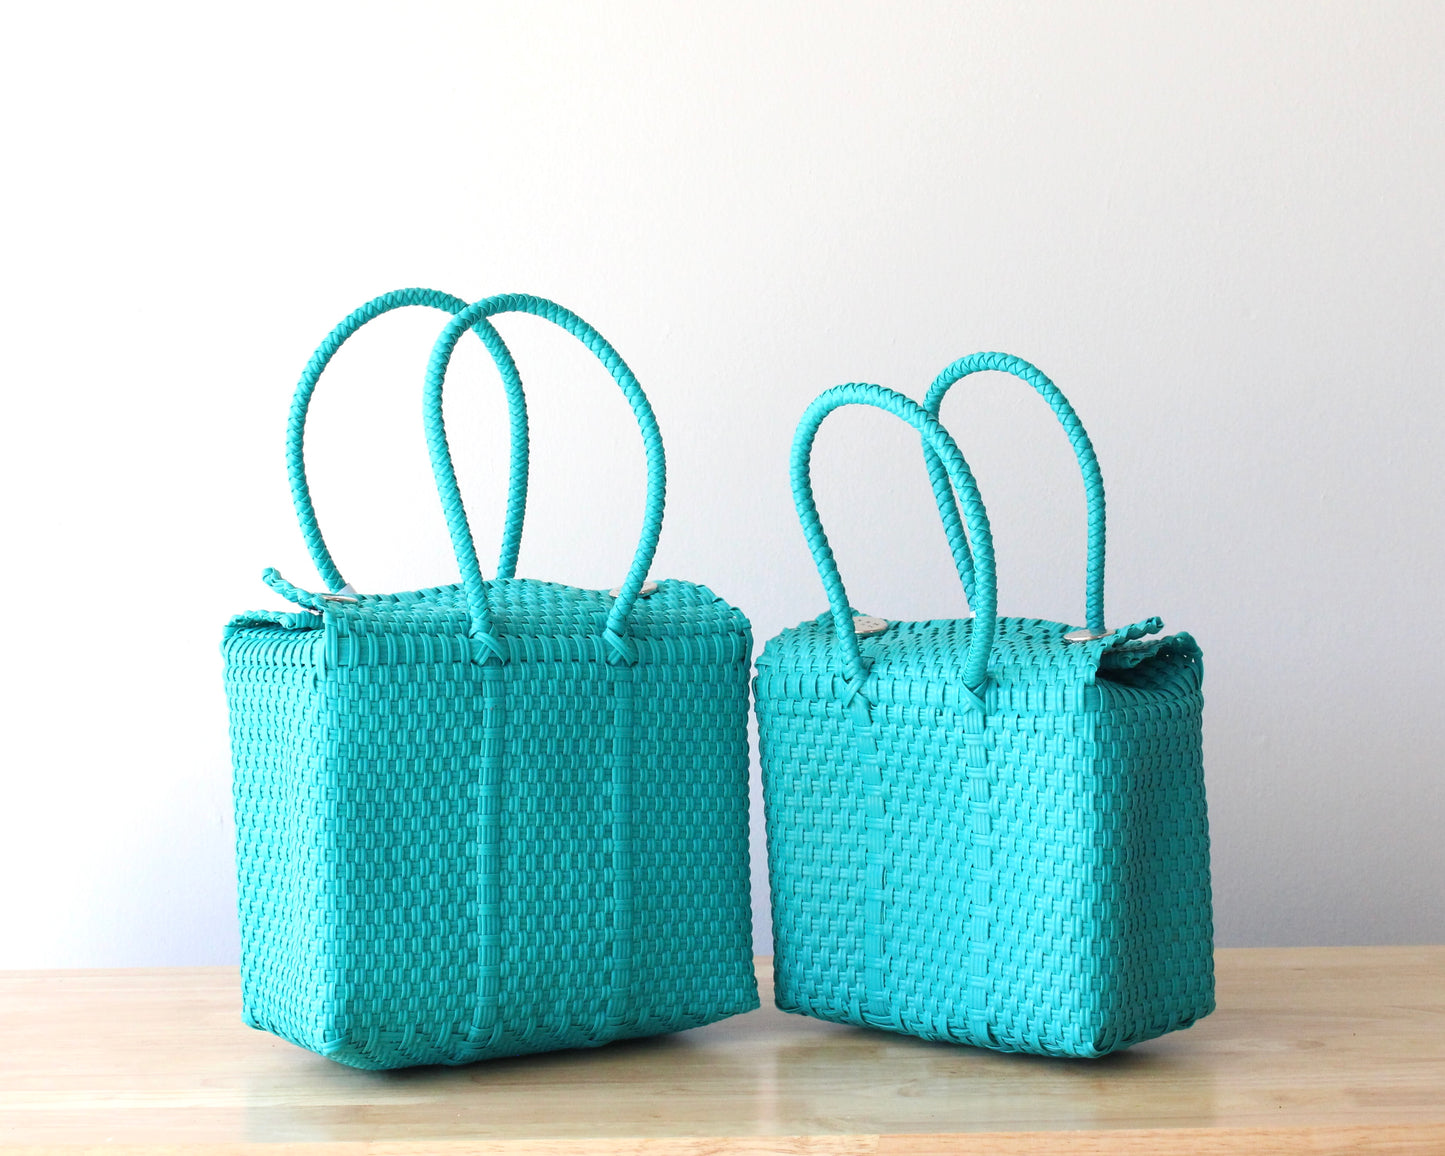 Buy 1, get 2 with 50% off: Turquoise Handbags Bundle